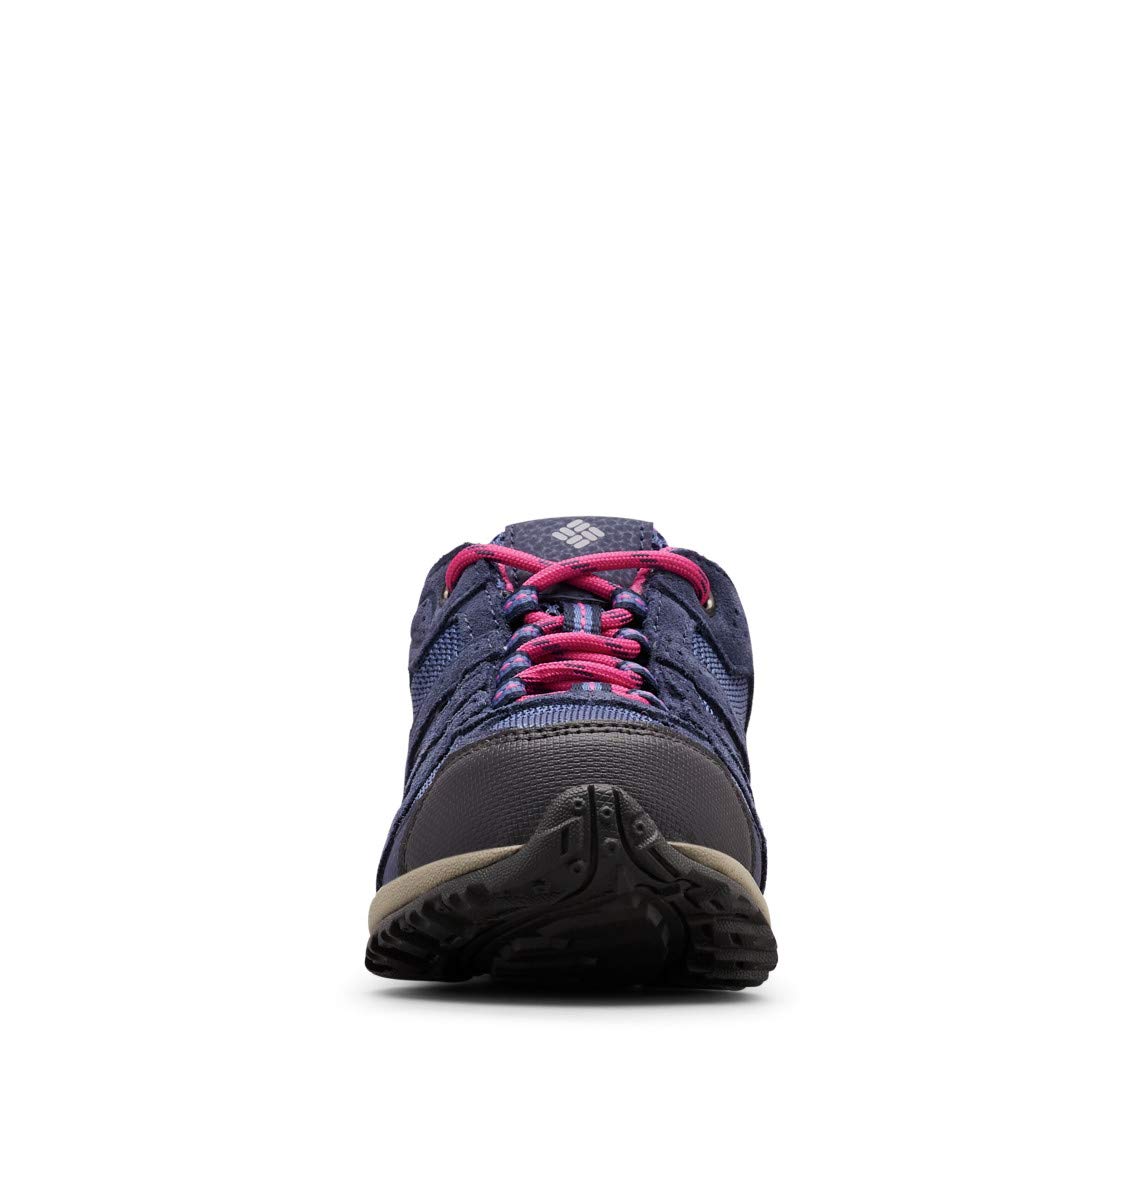 Columbia Unisex-Child Redmond Waterproof Hiking Shoe